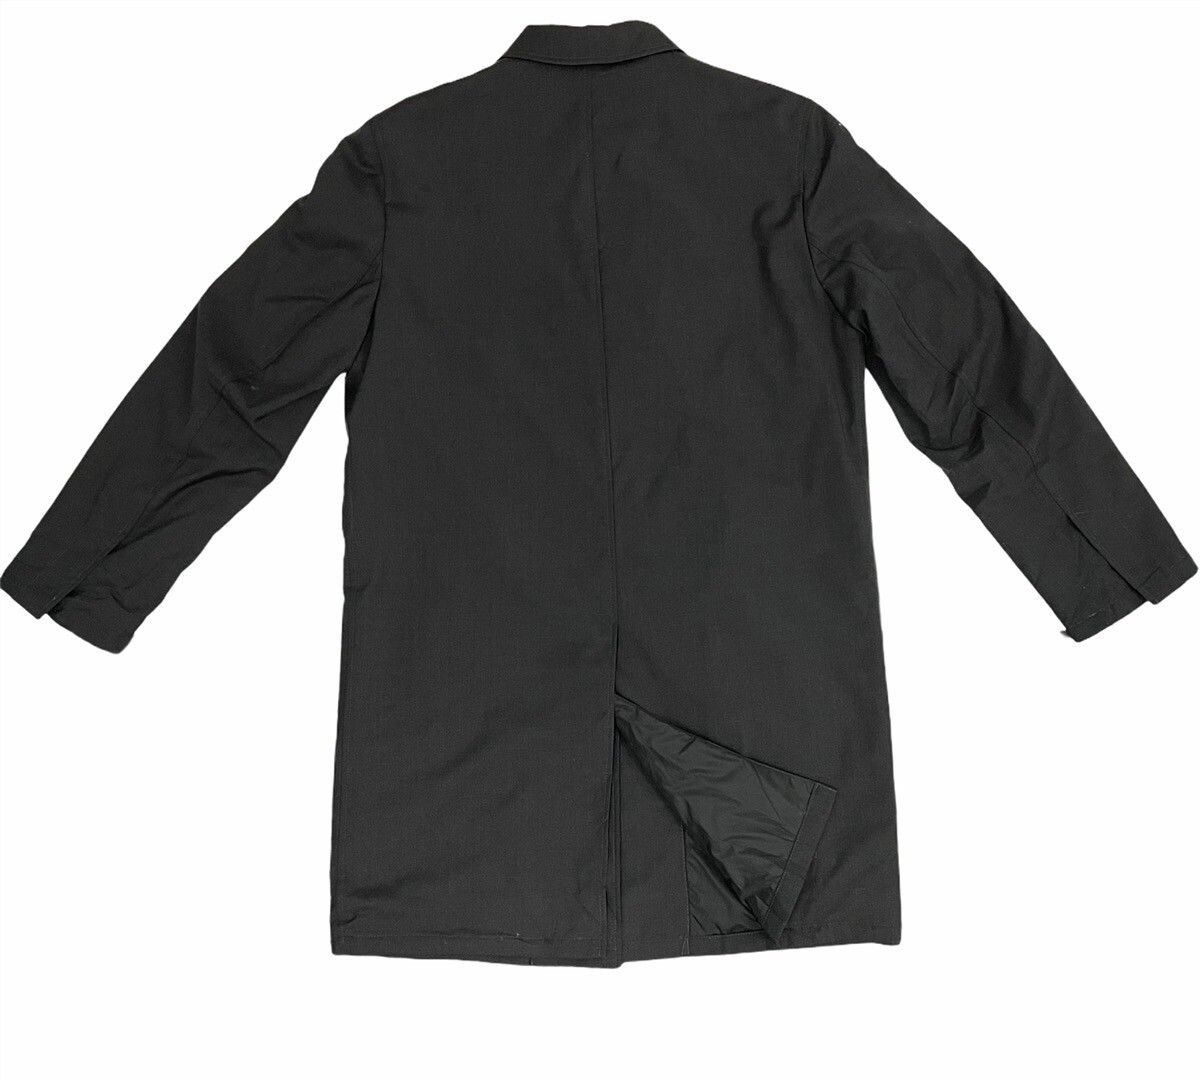 Prada Prada Trench coat Size US M / EU 48-50 / 2 - 2 Preview